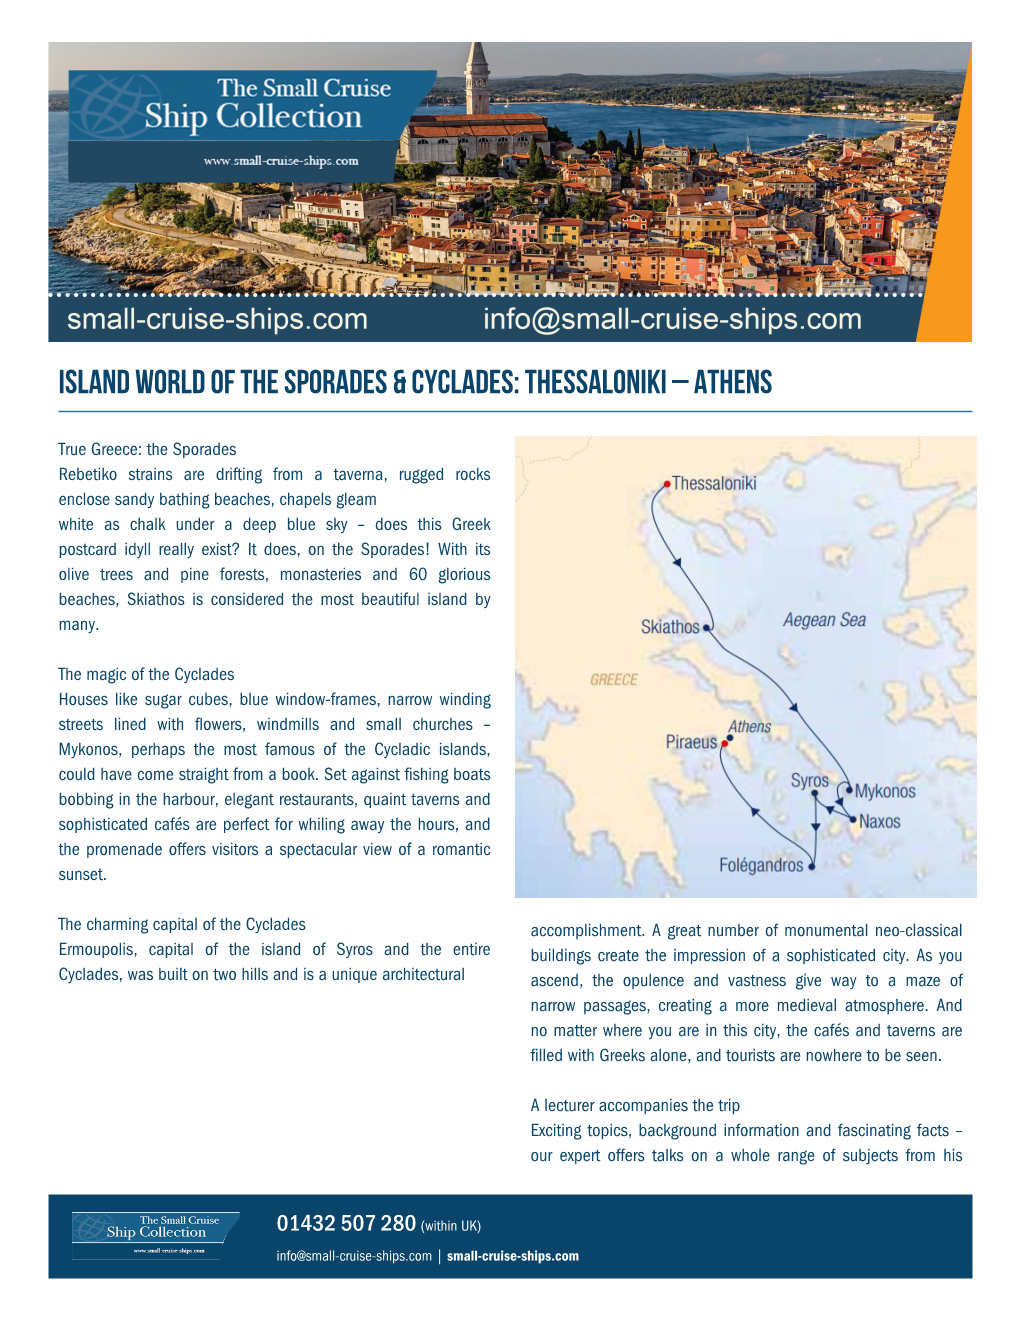 Island World of the Sporades & Cyclades: Thessaloniki